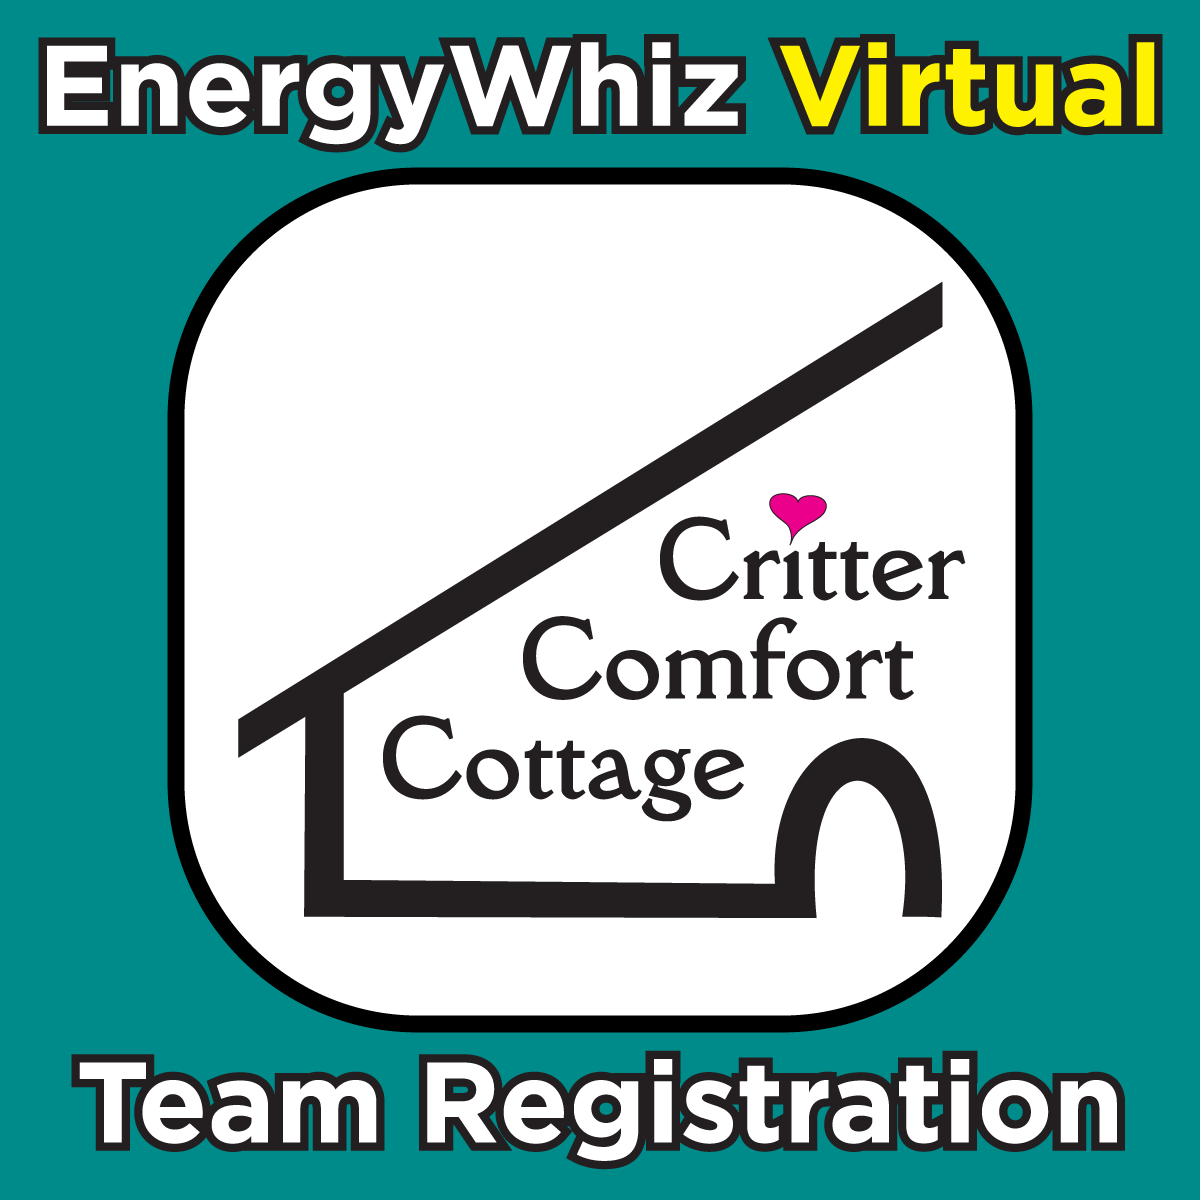 Virtual - Critter Comfort Cottage Team